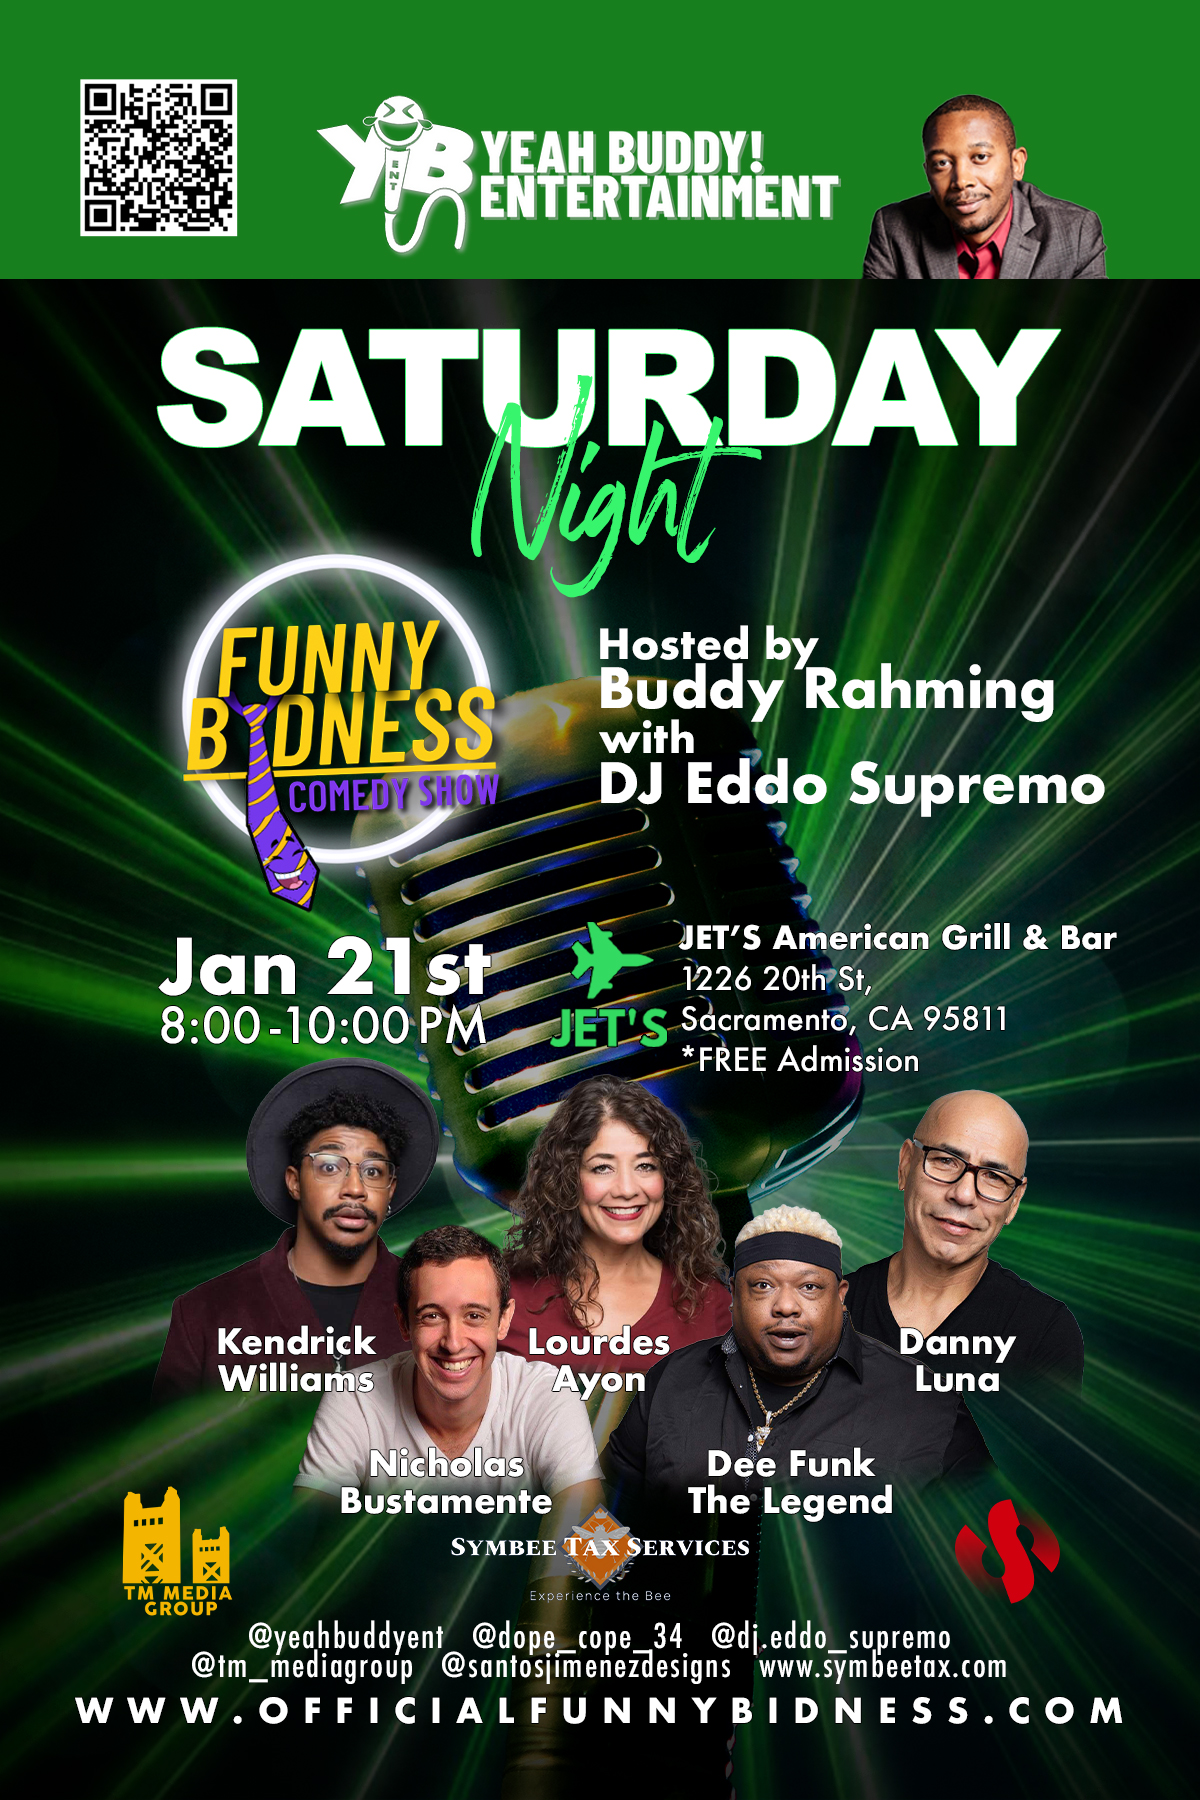 Saturday Night: Funny Bidness Comedy Show -Jan 21st